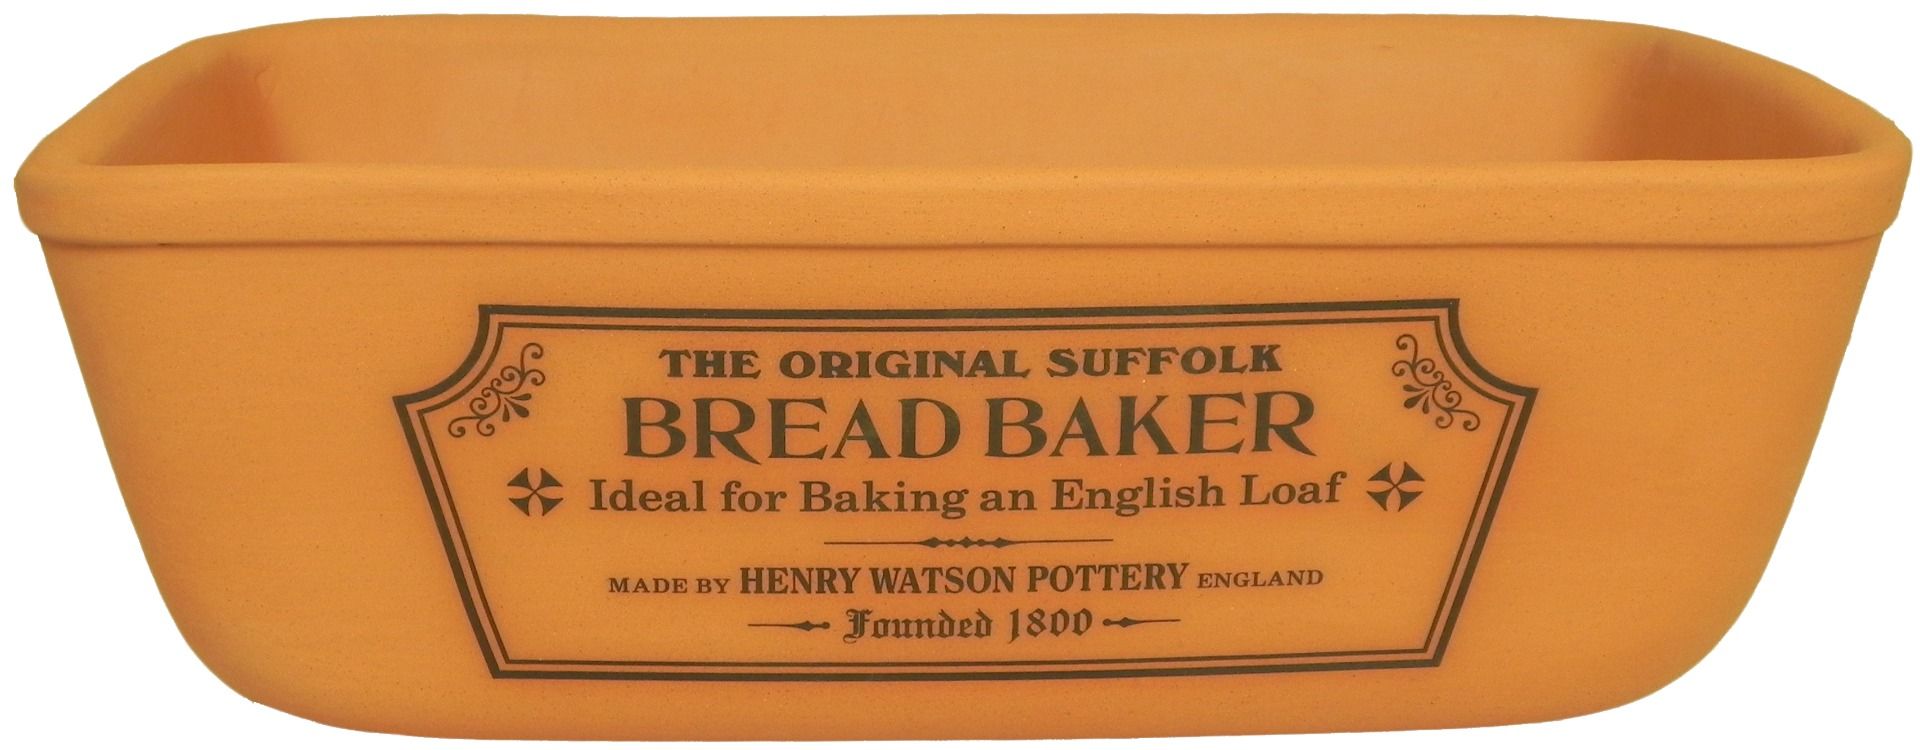 Original Suffolk Collection - Bread Baker - Terracotta - Made in England